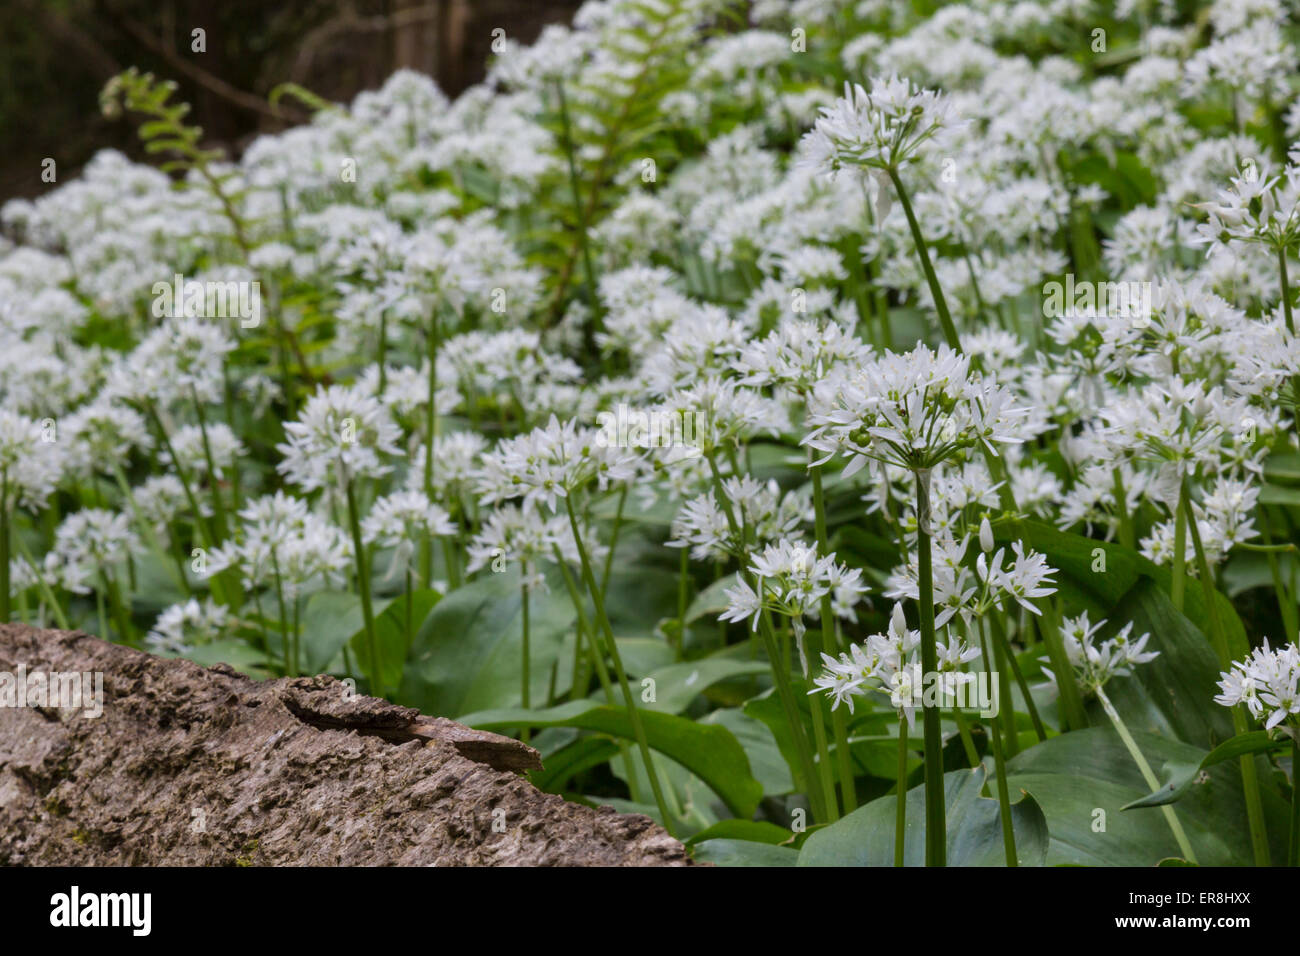 Wild garlic in flower on the forest floor Stock Photo